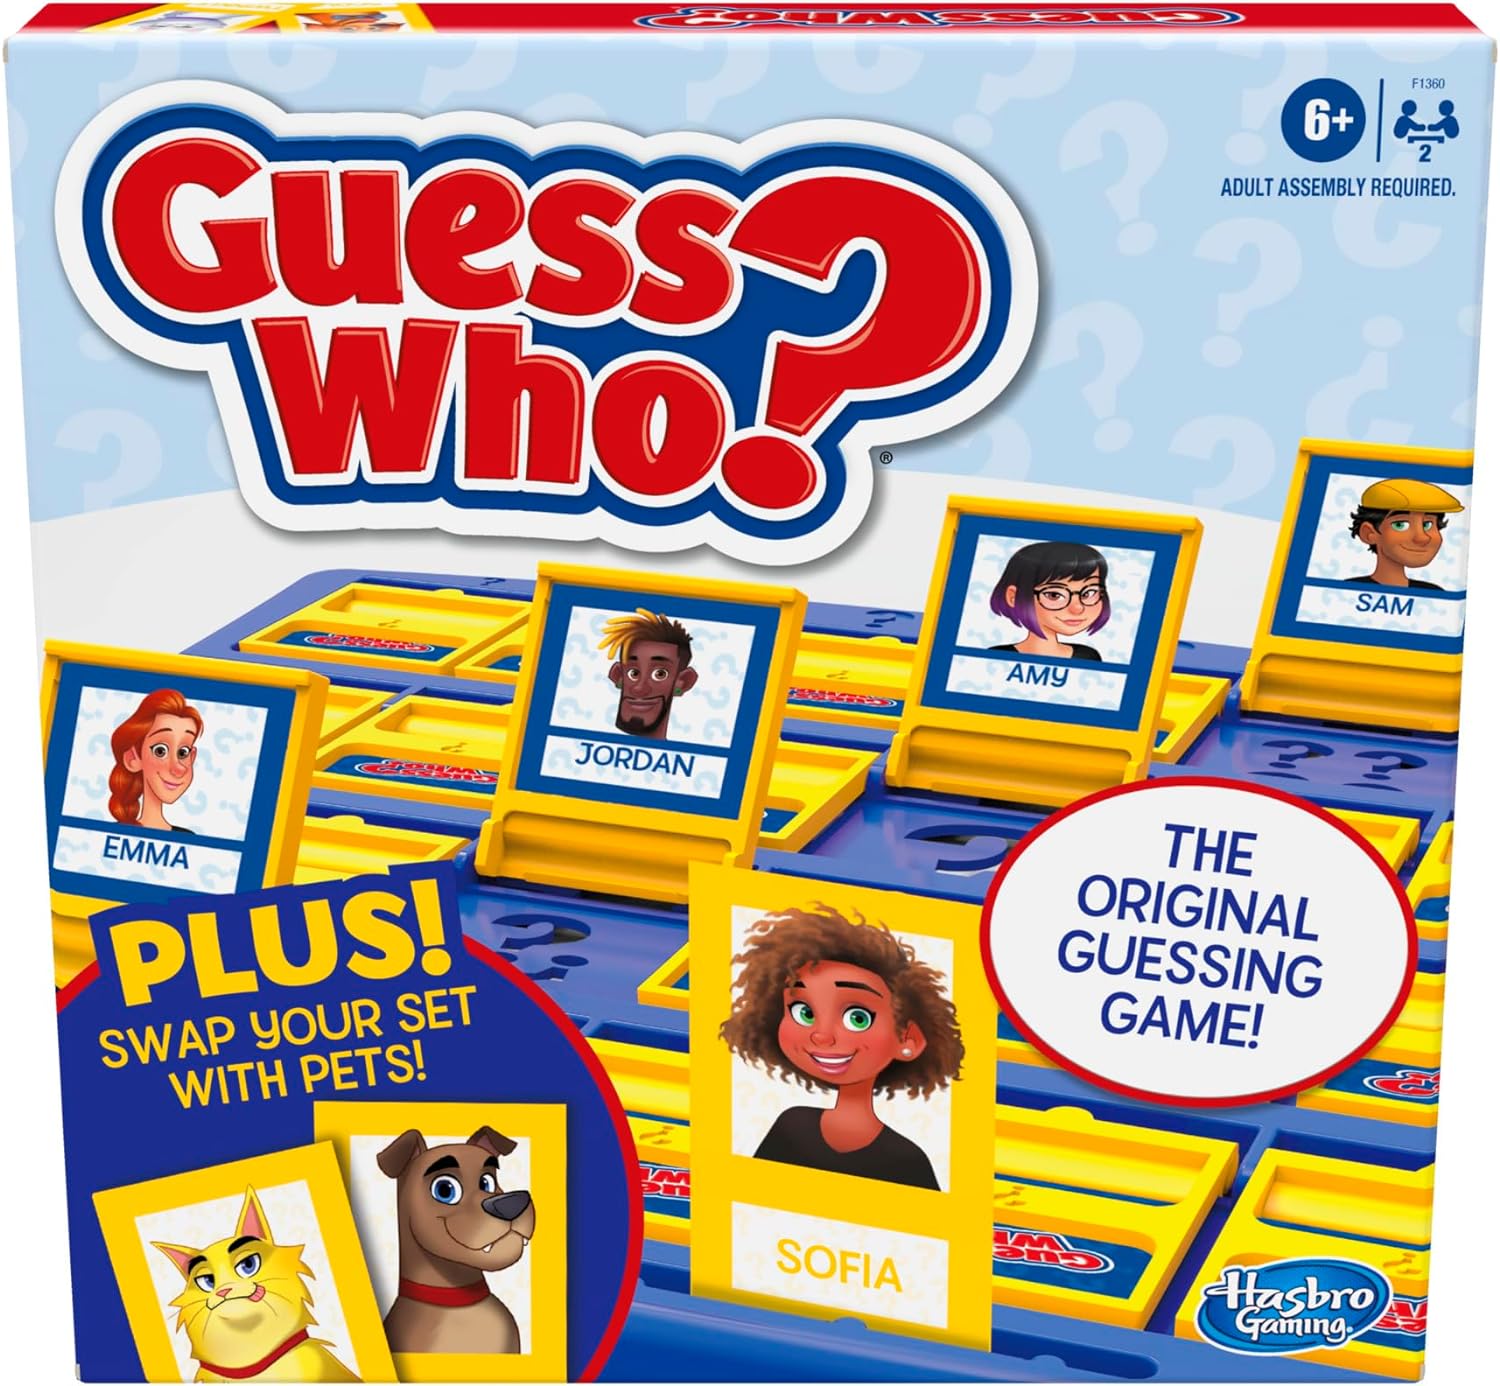 Hasbro Gaming Guess Who? Board Game Review